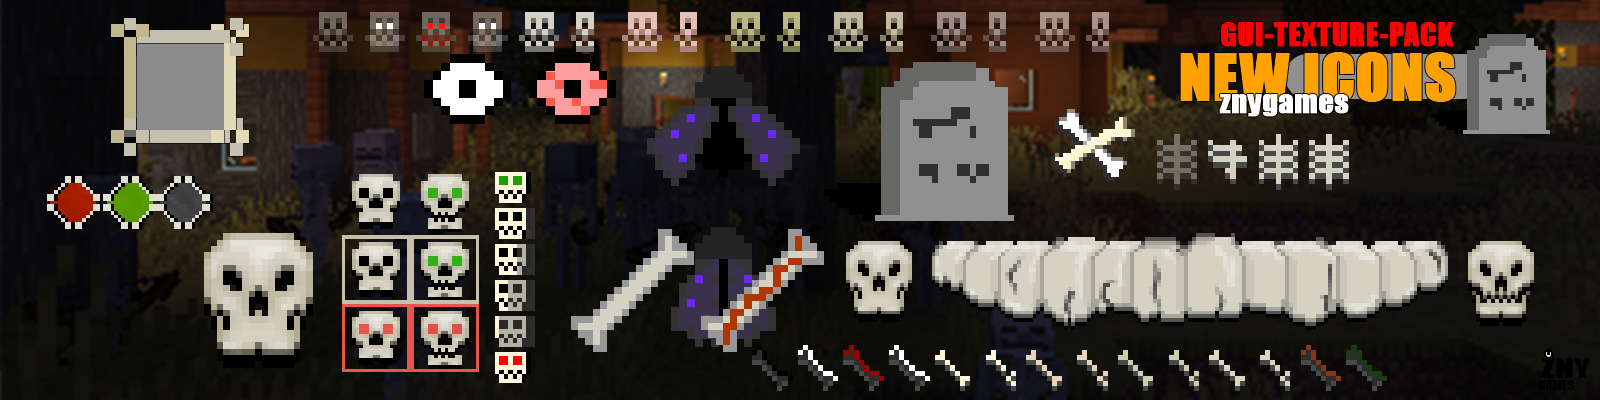 znygames skull and bones icon